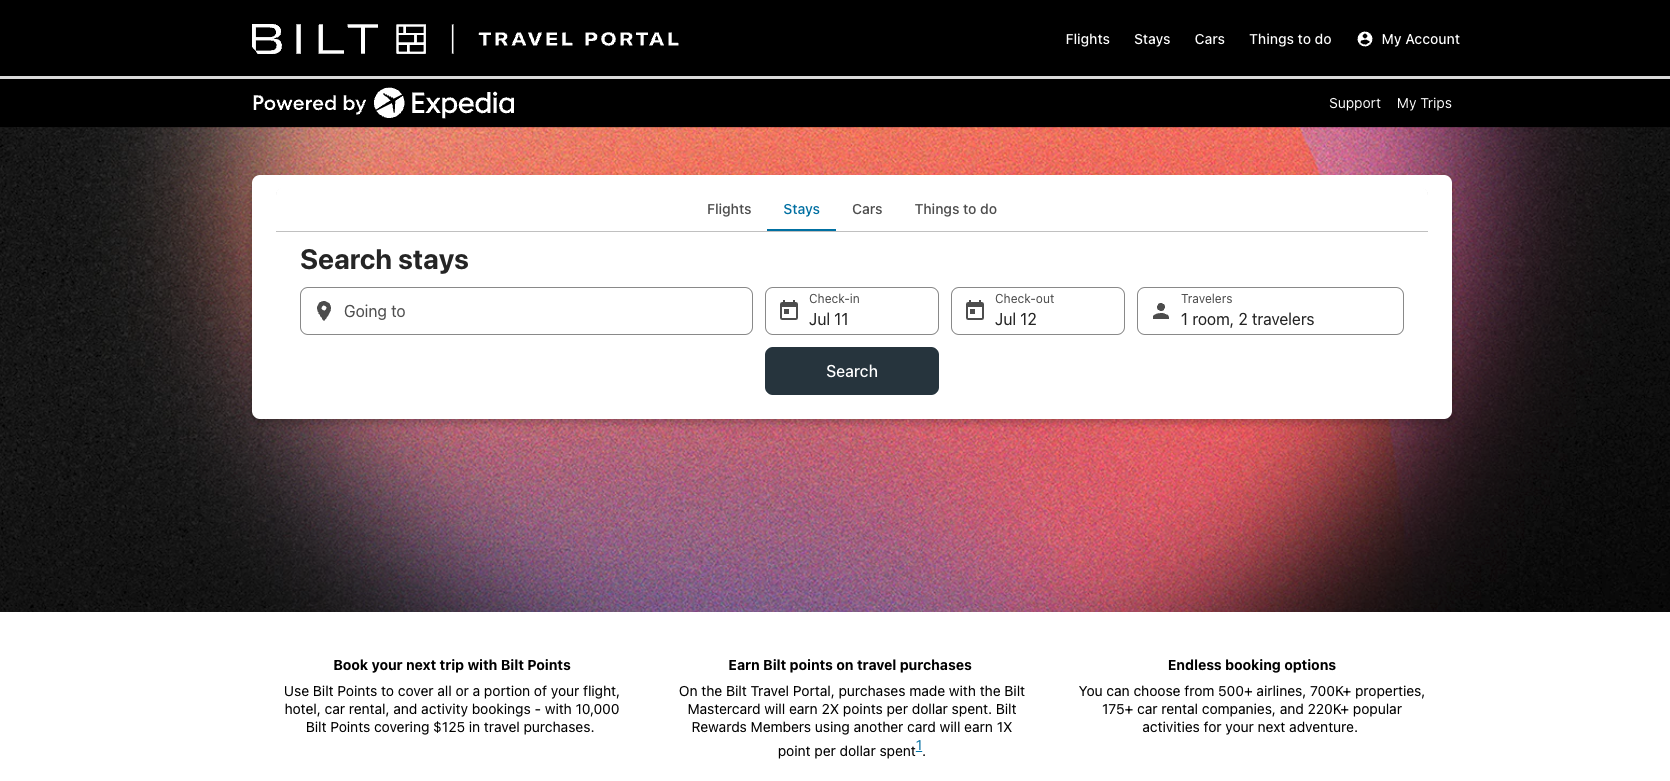 Bilt Rewards Travel Portal desktop view